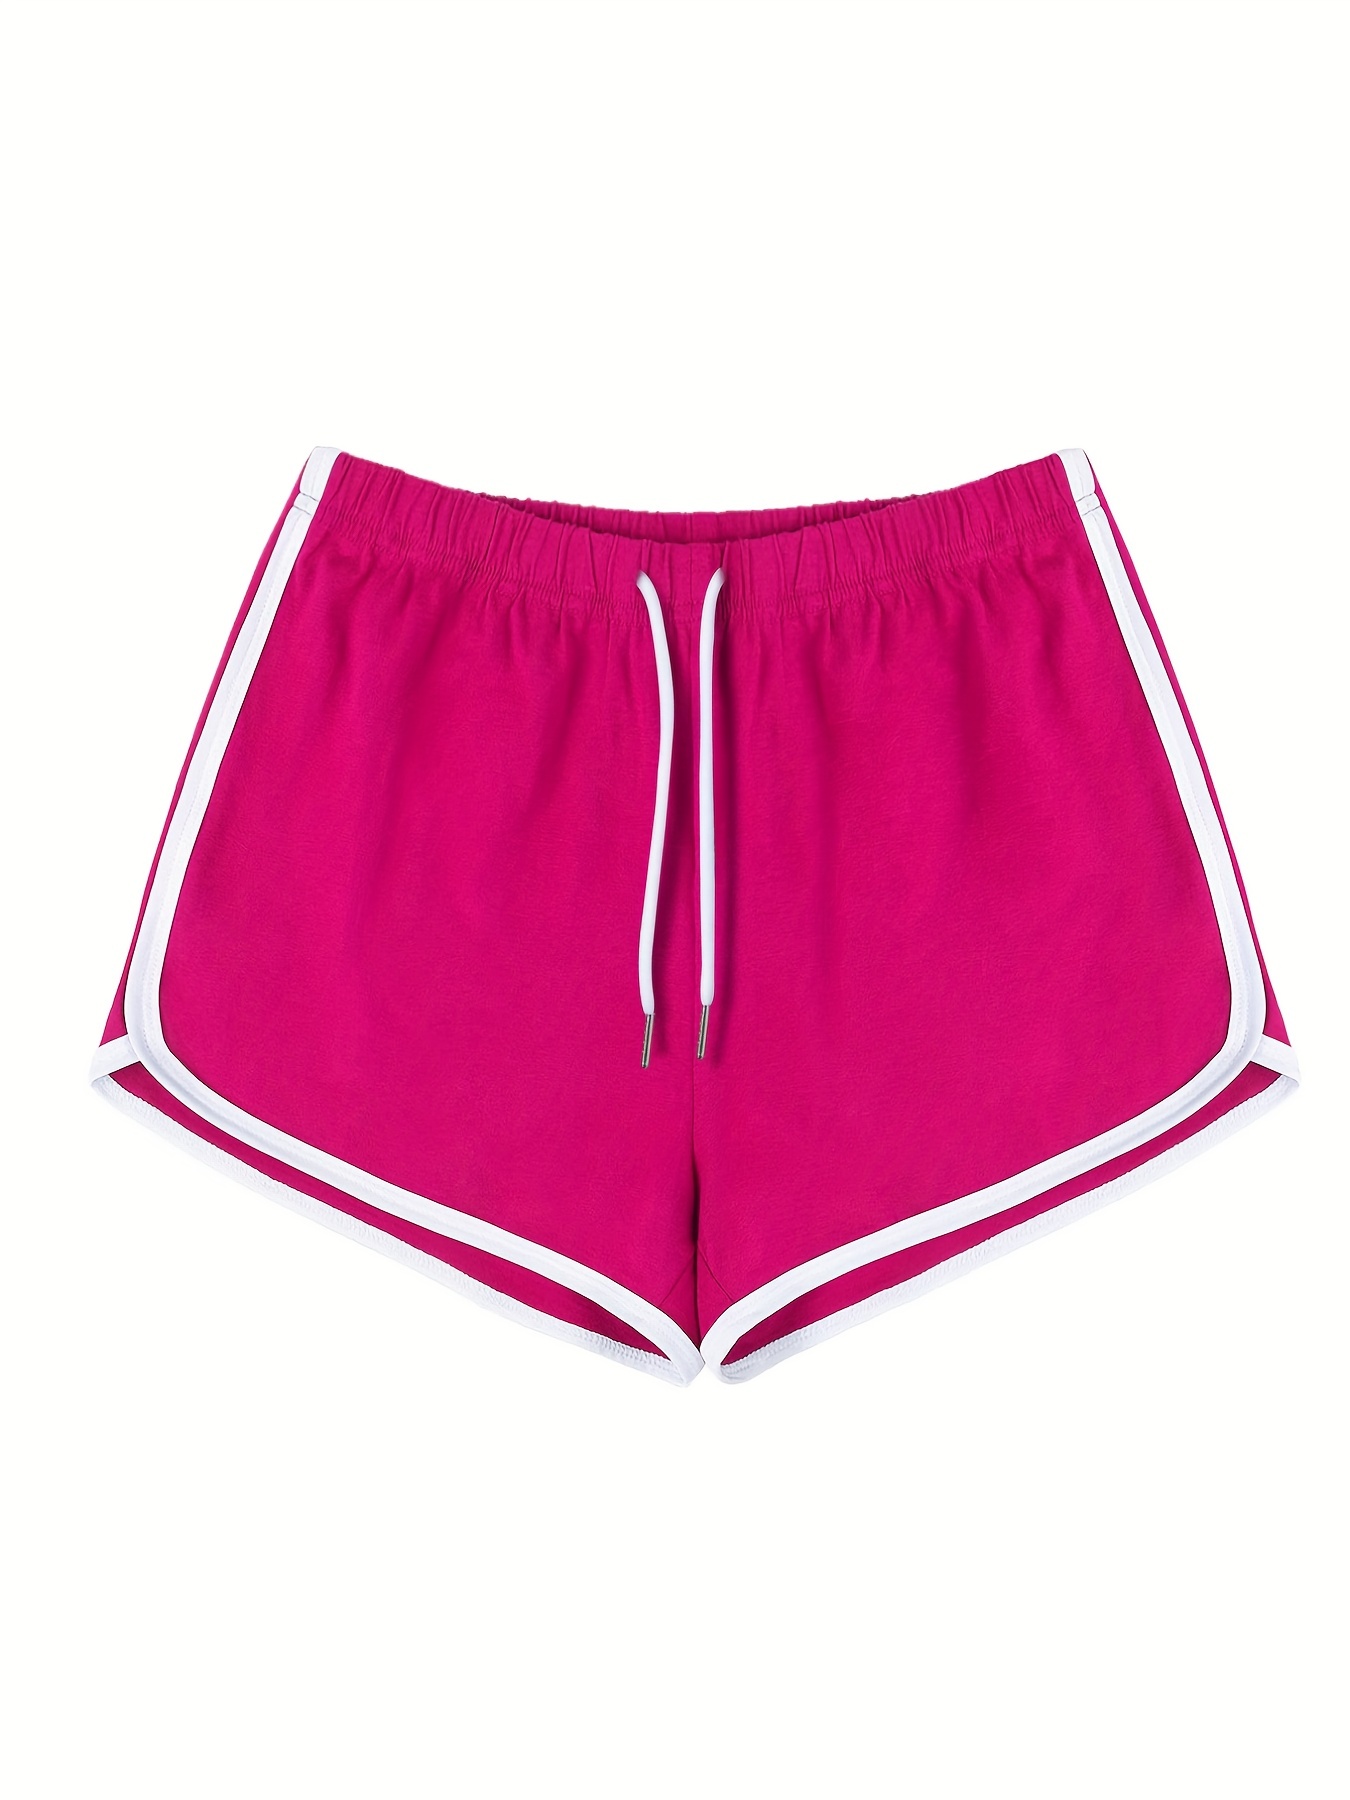 Absorbs Sweat Contrast Binding Sports Shorts